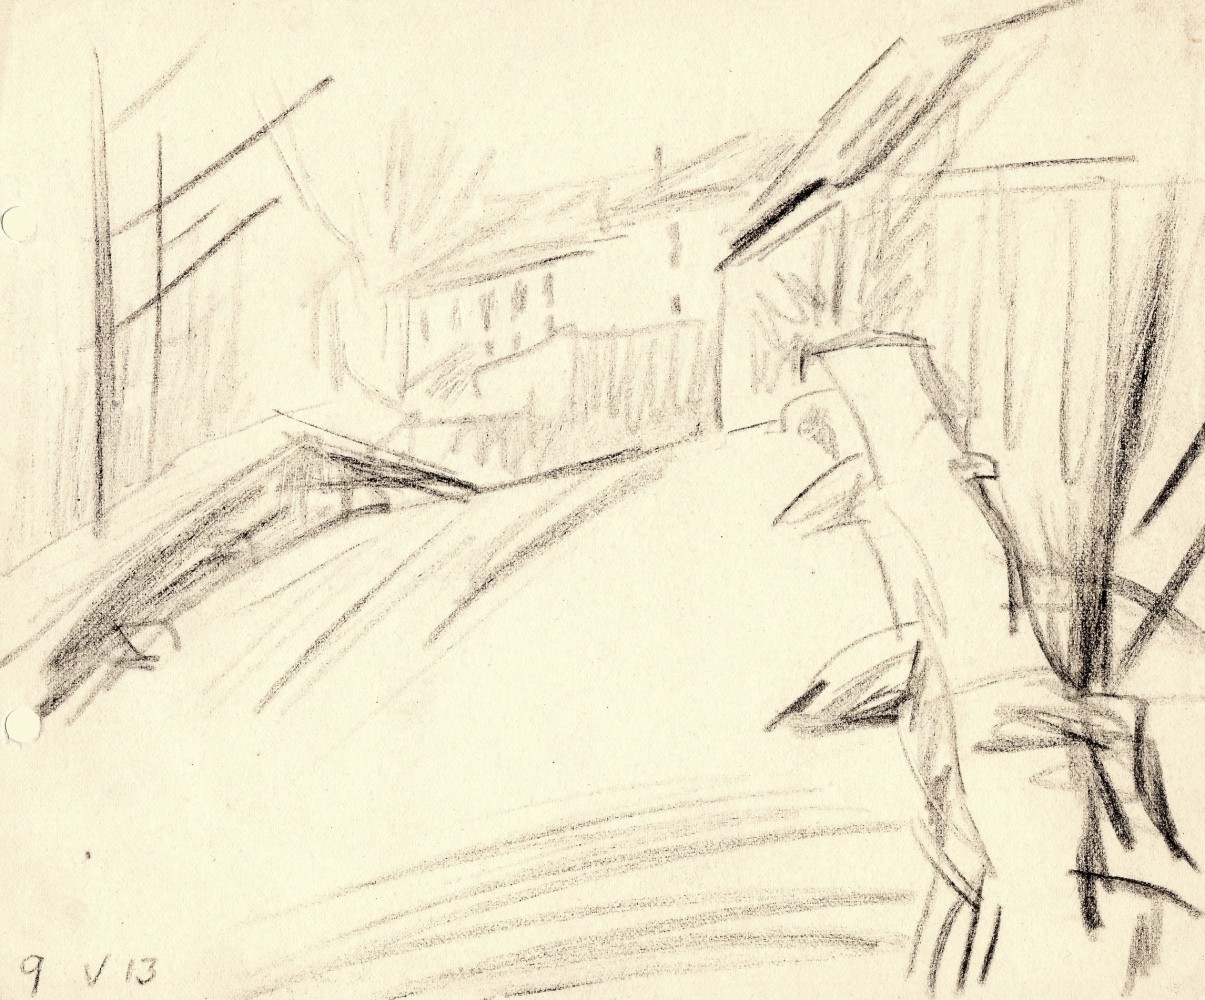 Lyonel Feininger (1871&amp;ndash;1956)

(Stone Bridge, Oberweimar), 1913

Pencil on paper
6 3/8 x 8 in. (16.2 x 20.3 cm)
Dated lower left: 9 V 13

&amp;nbsp;

AMFA 0744